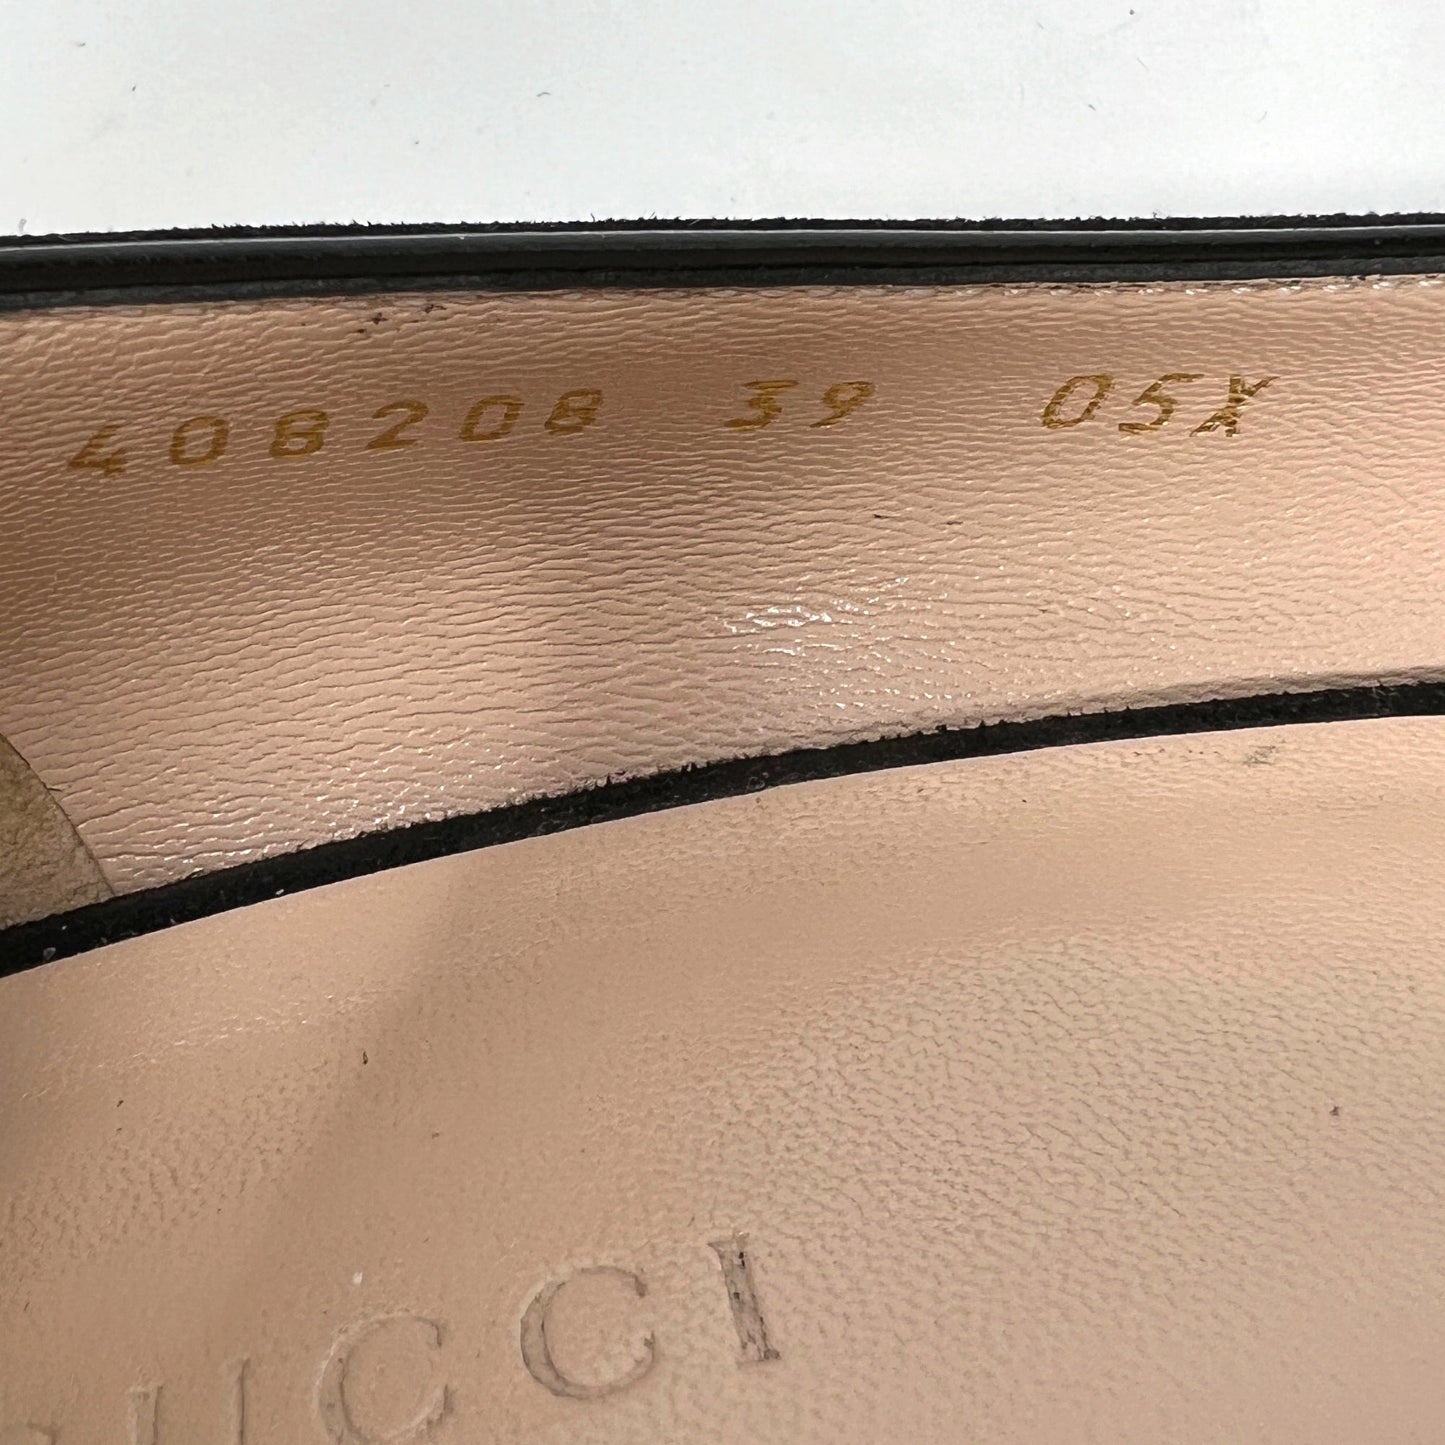 Gucci Black Suede Marmont GG Gold Logo Kiltie Fringe Block Heel Loafers Heels Size EU 39